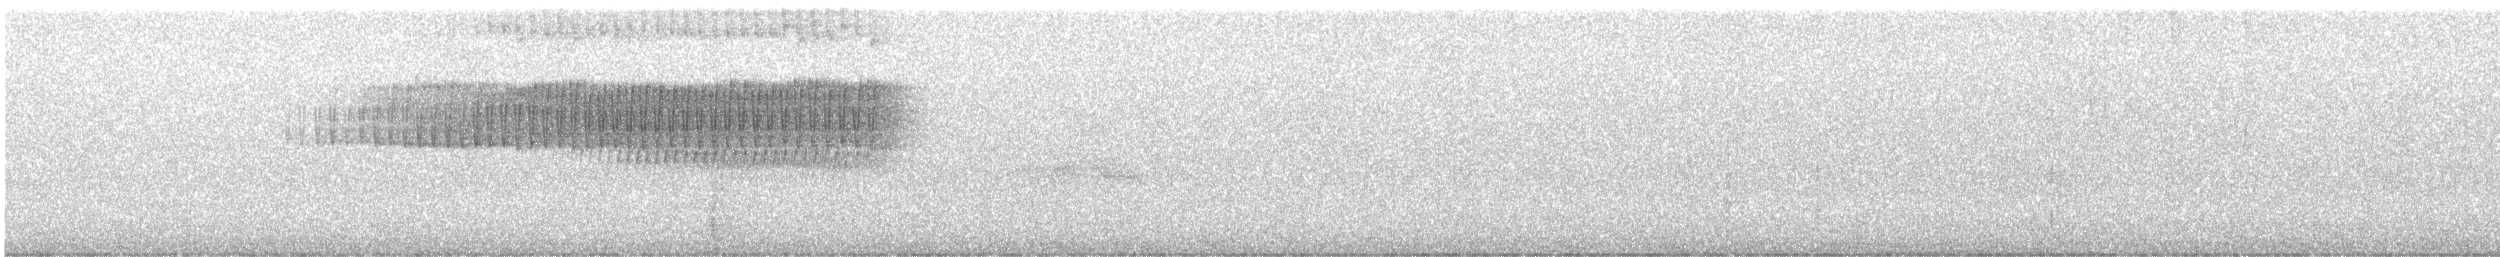 Paruline vermivore - ML620033666